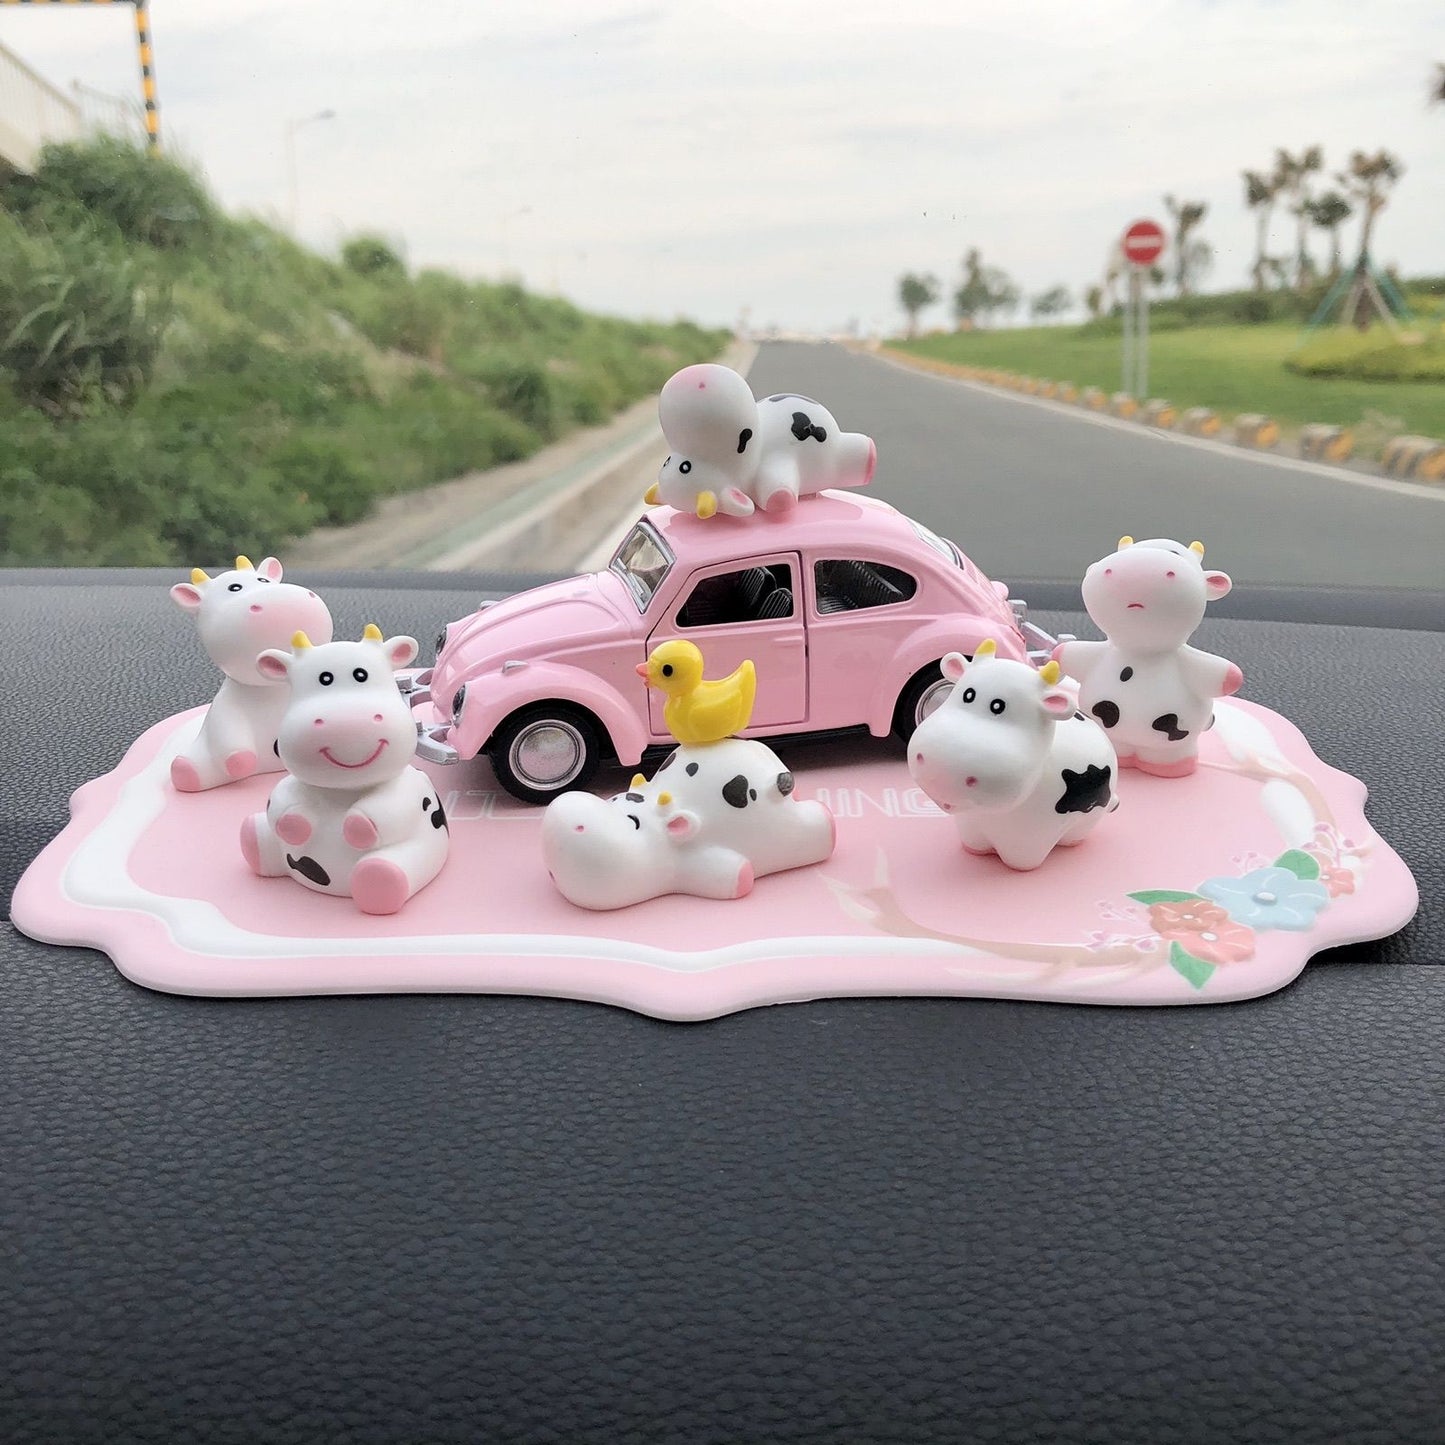 Cute Cartoon Cow Car Decoration Ornament Gift